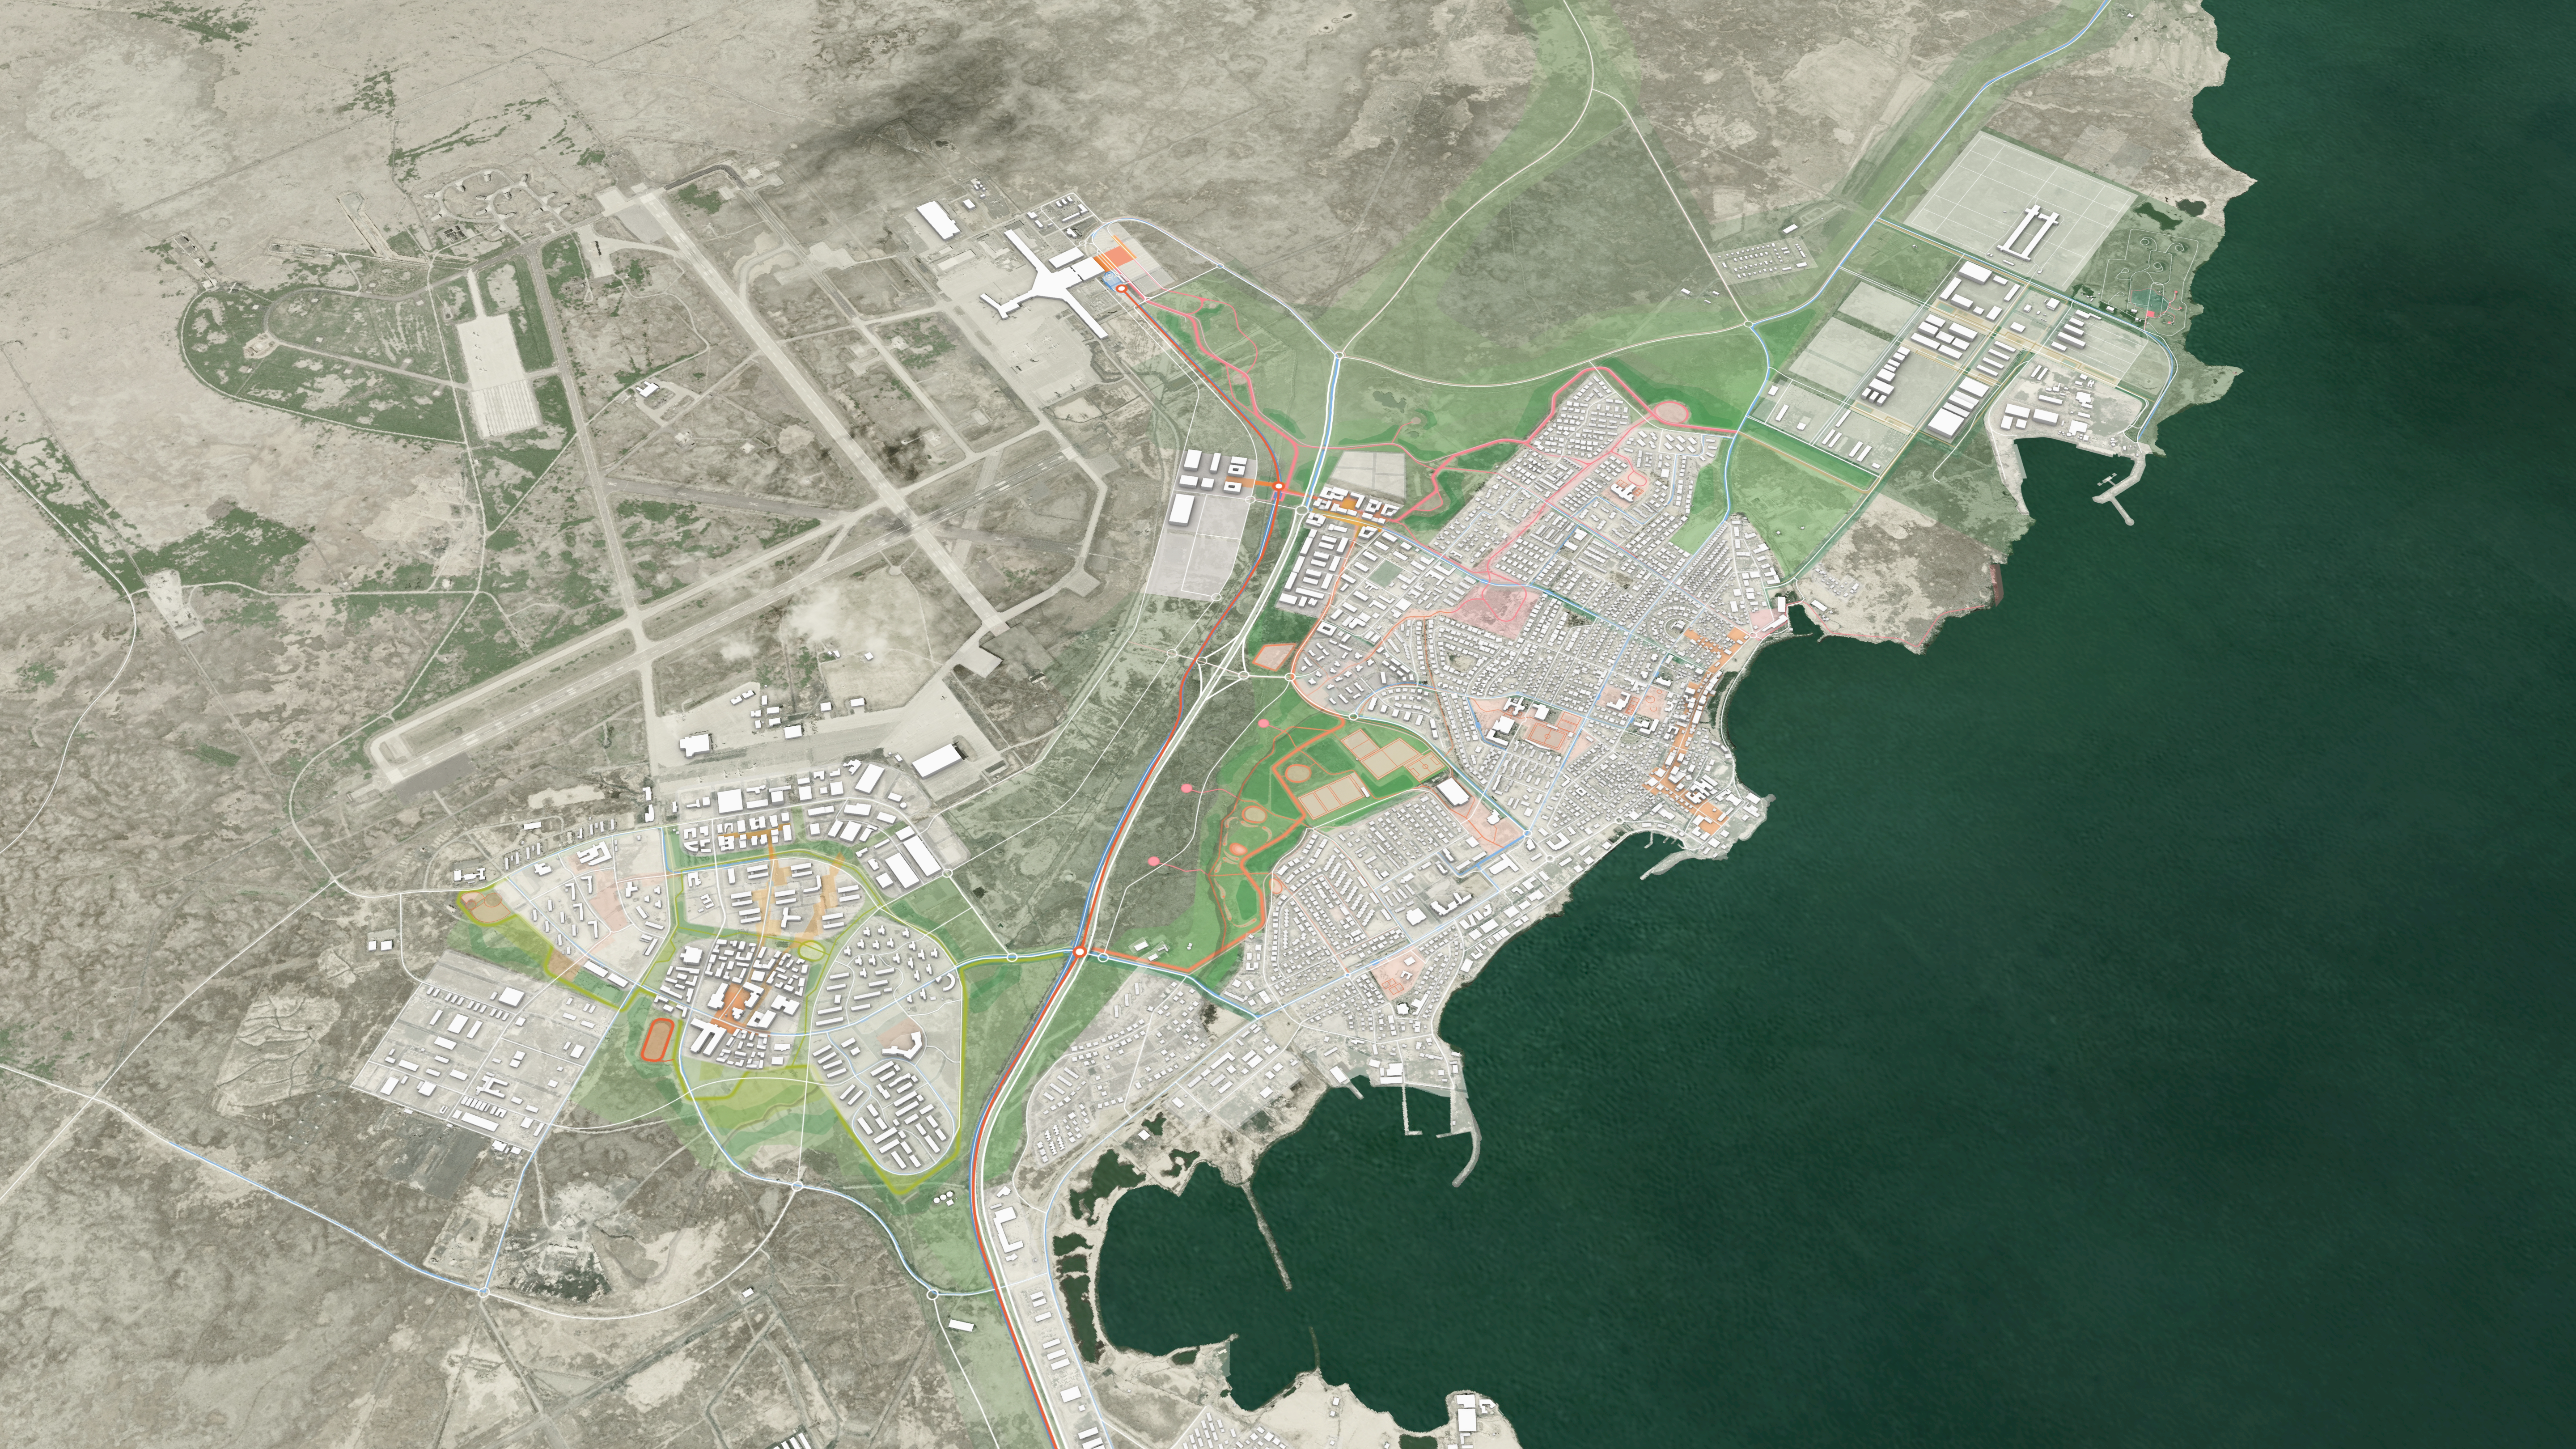 KCAP Progress Master Plan for Keflavík Airport Area